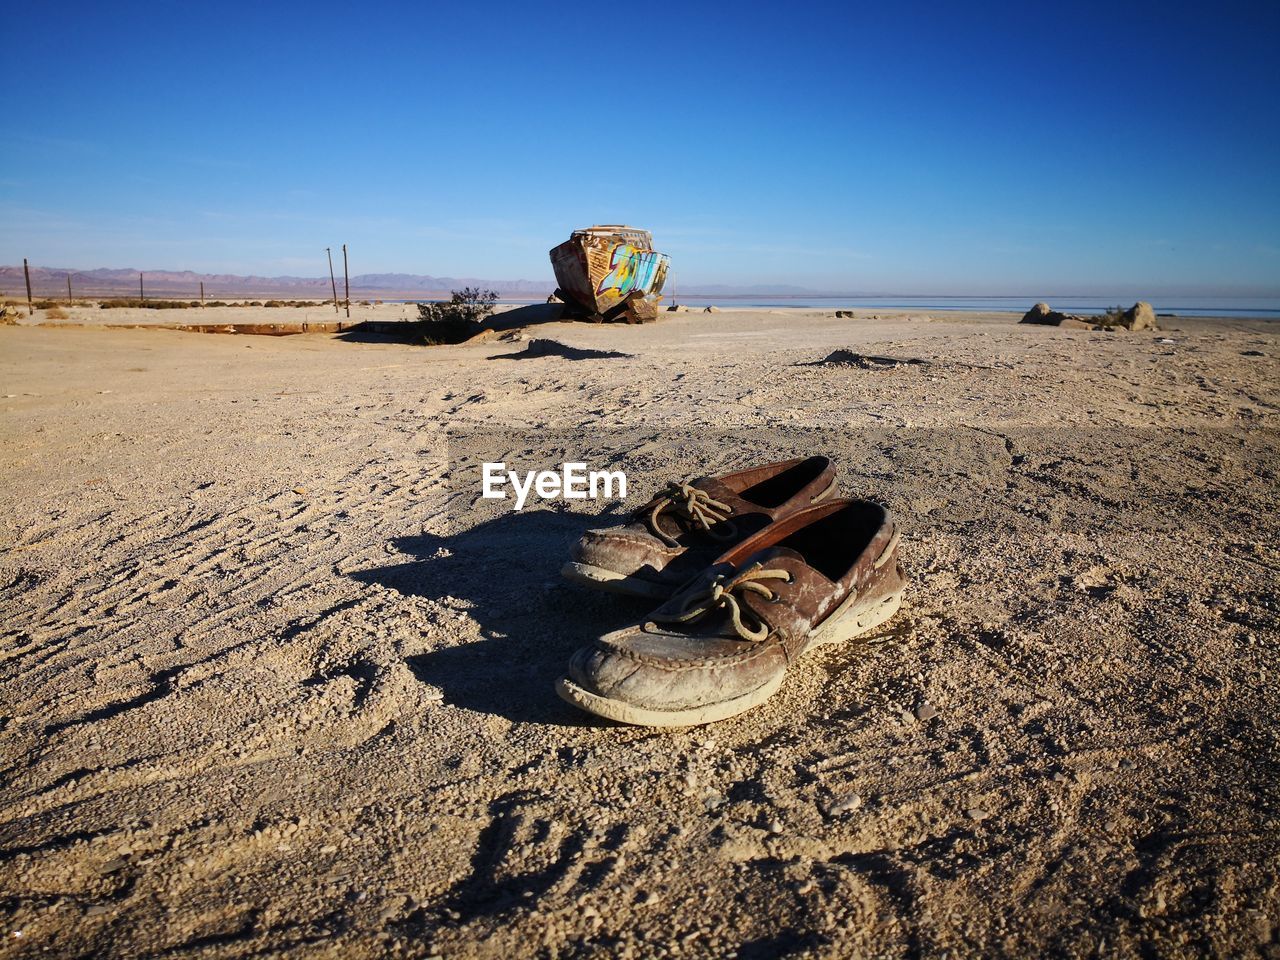 Abandoned shoes on sandy beach against clear sky